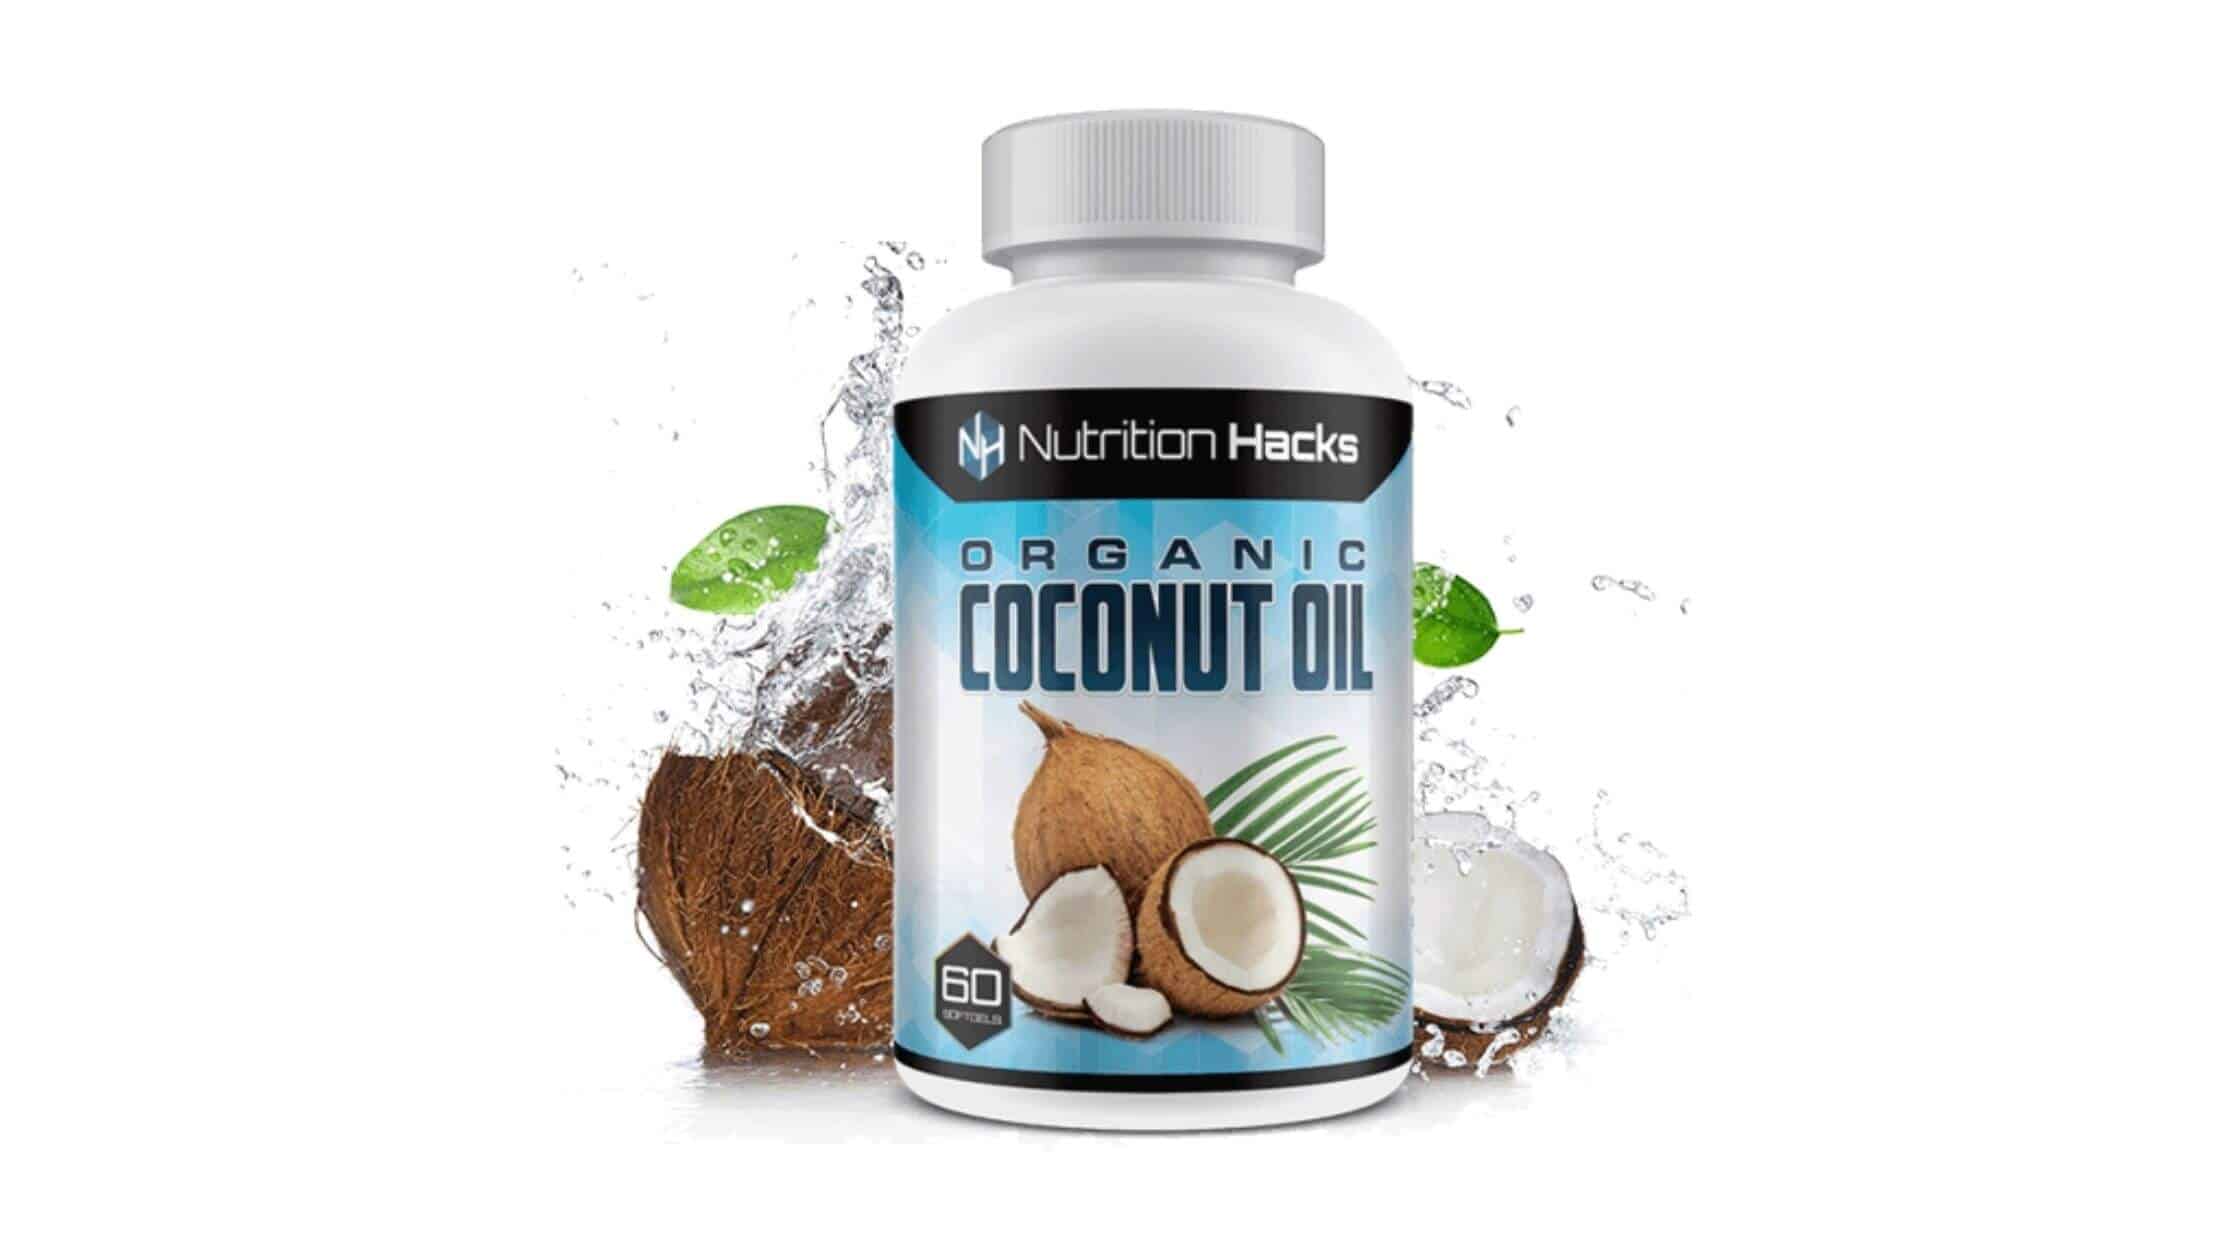 Nutrition Hacks Organic Coconut Oil 